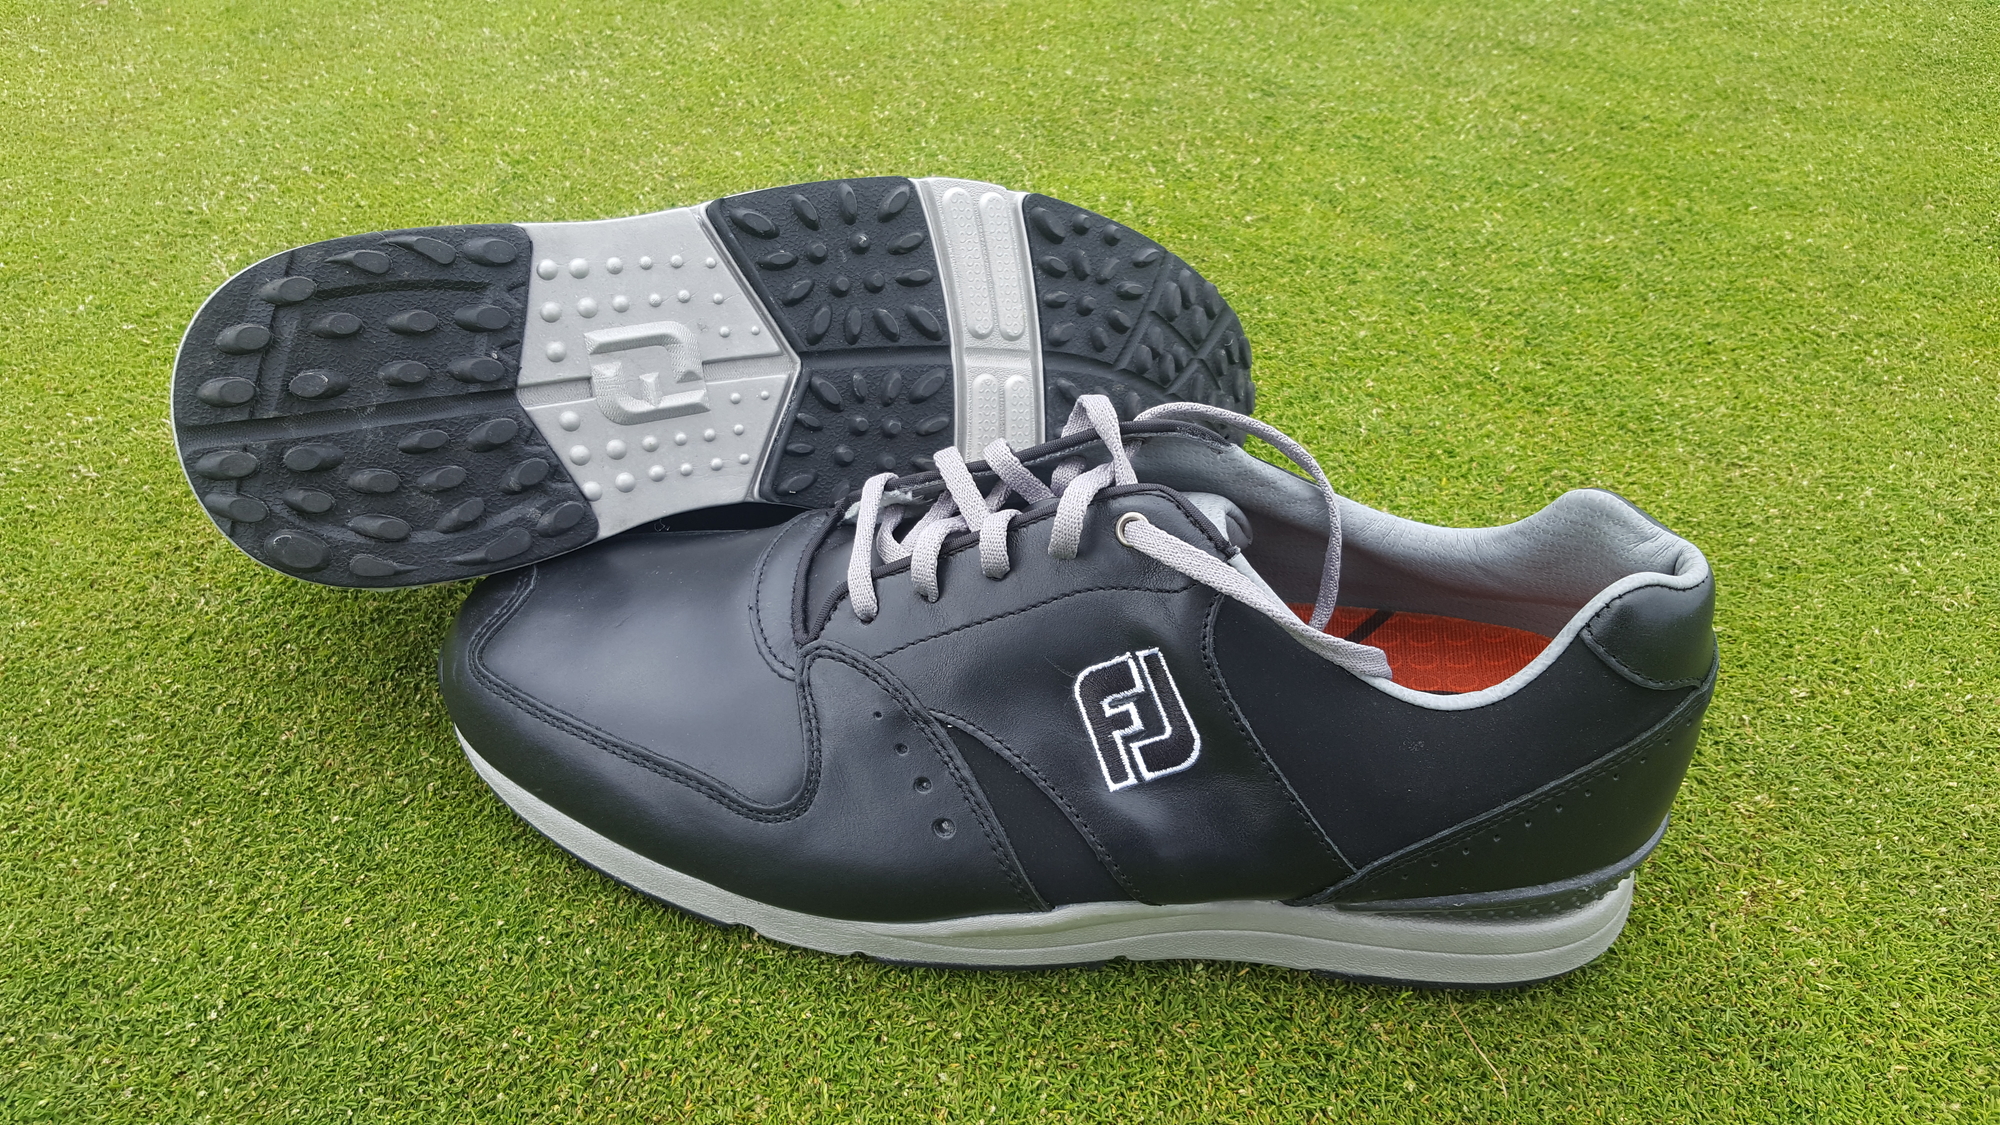 Contour Casual golf shoe review 